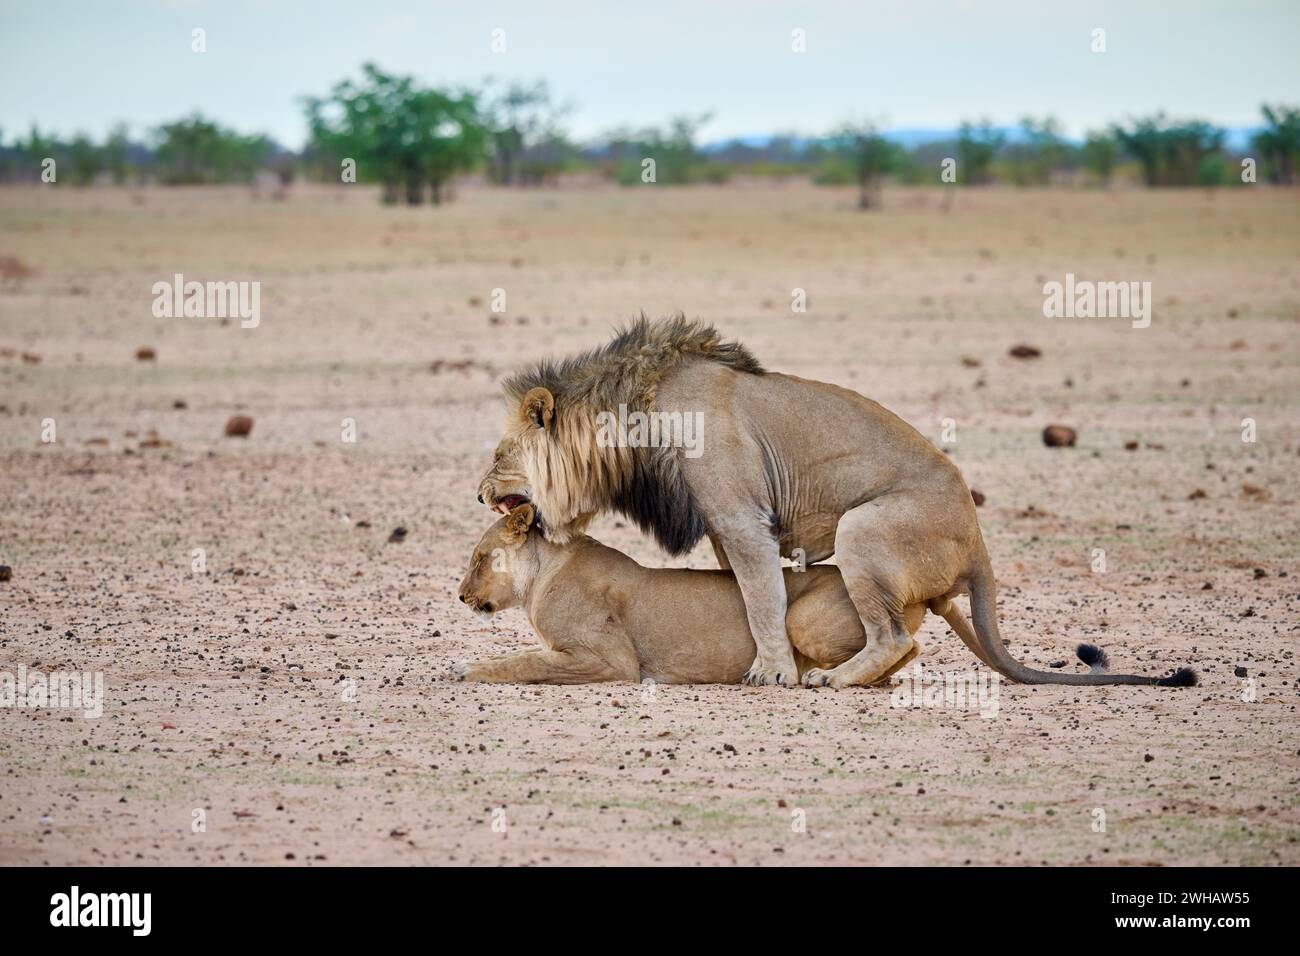 Coppia di leoni accoppiati, Parco Nazionale di Etosha, Namibia, Africa Foto Stock